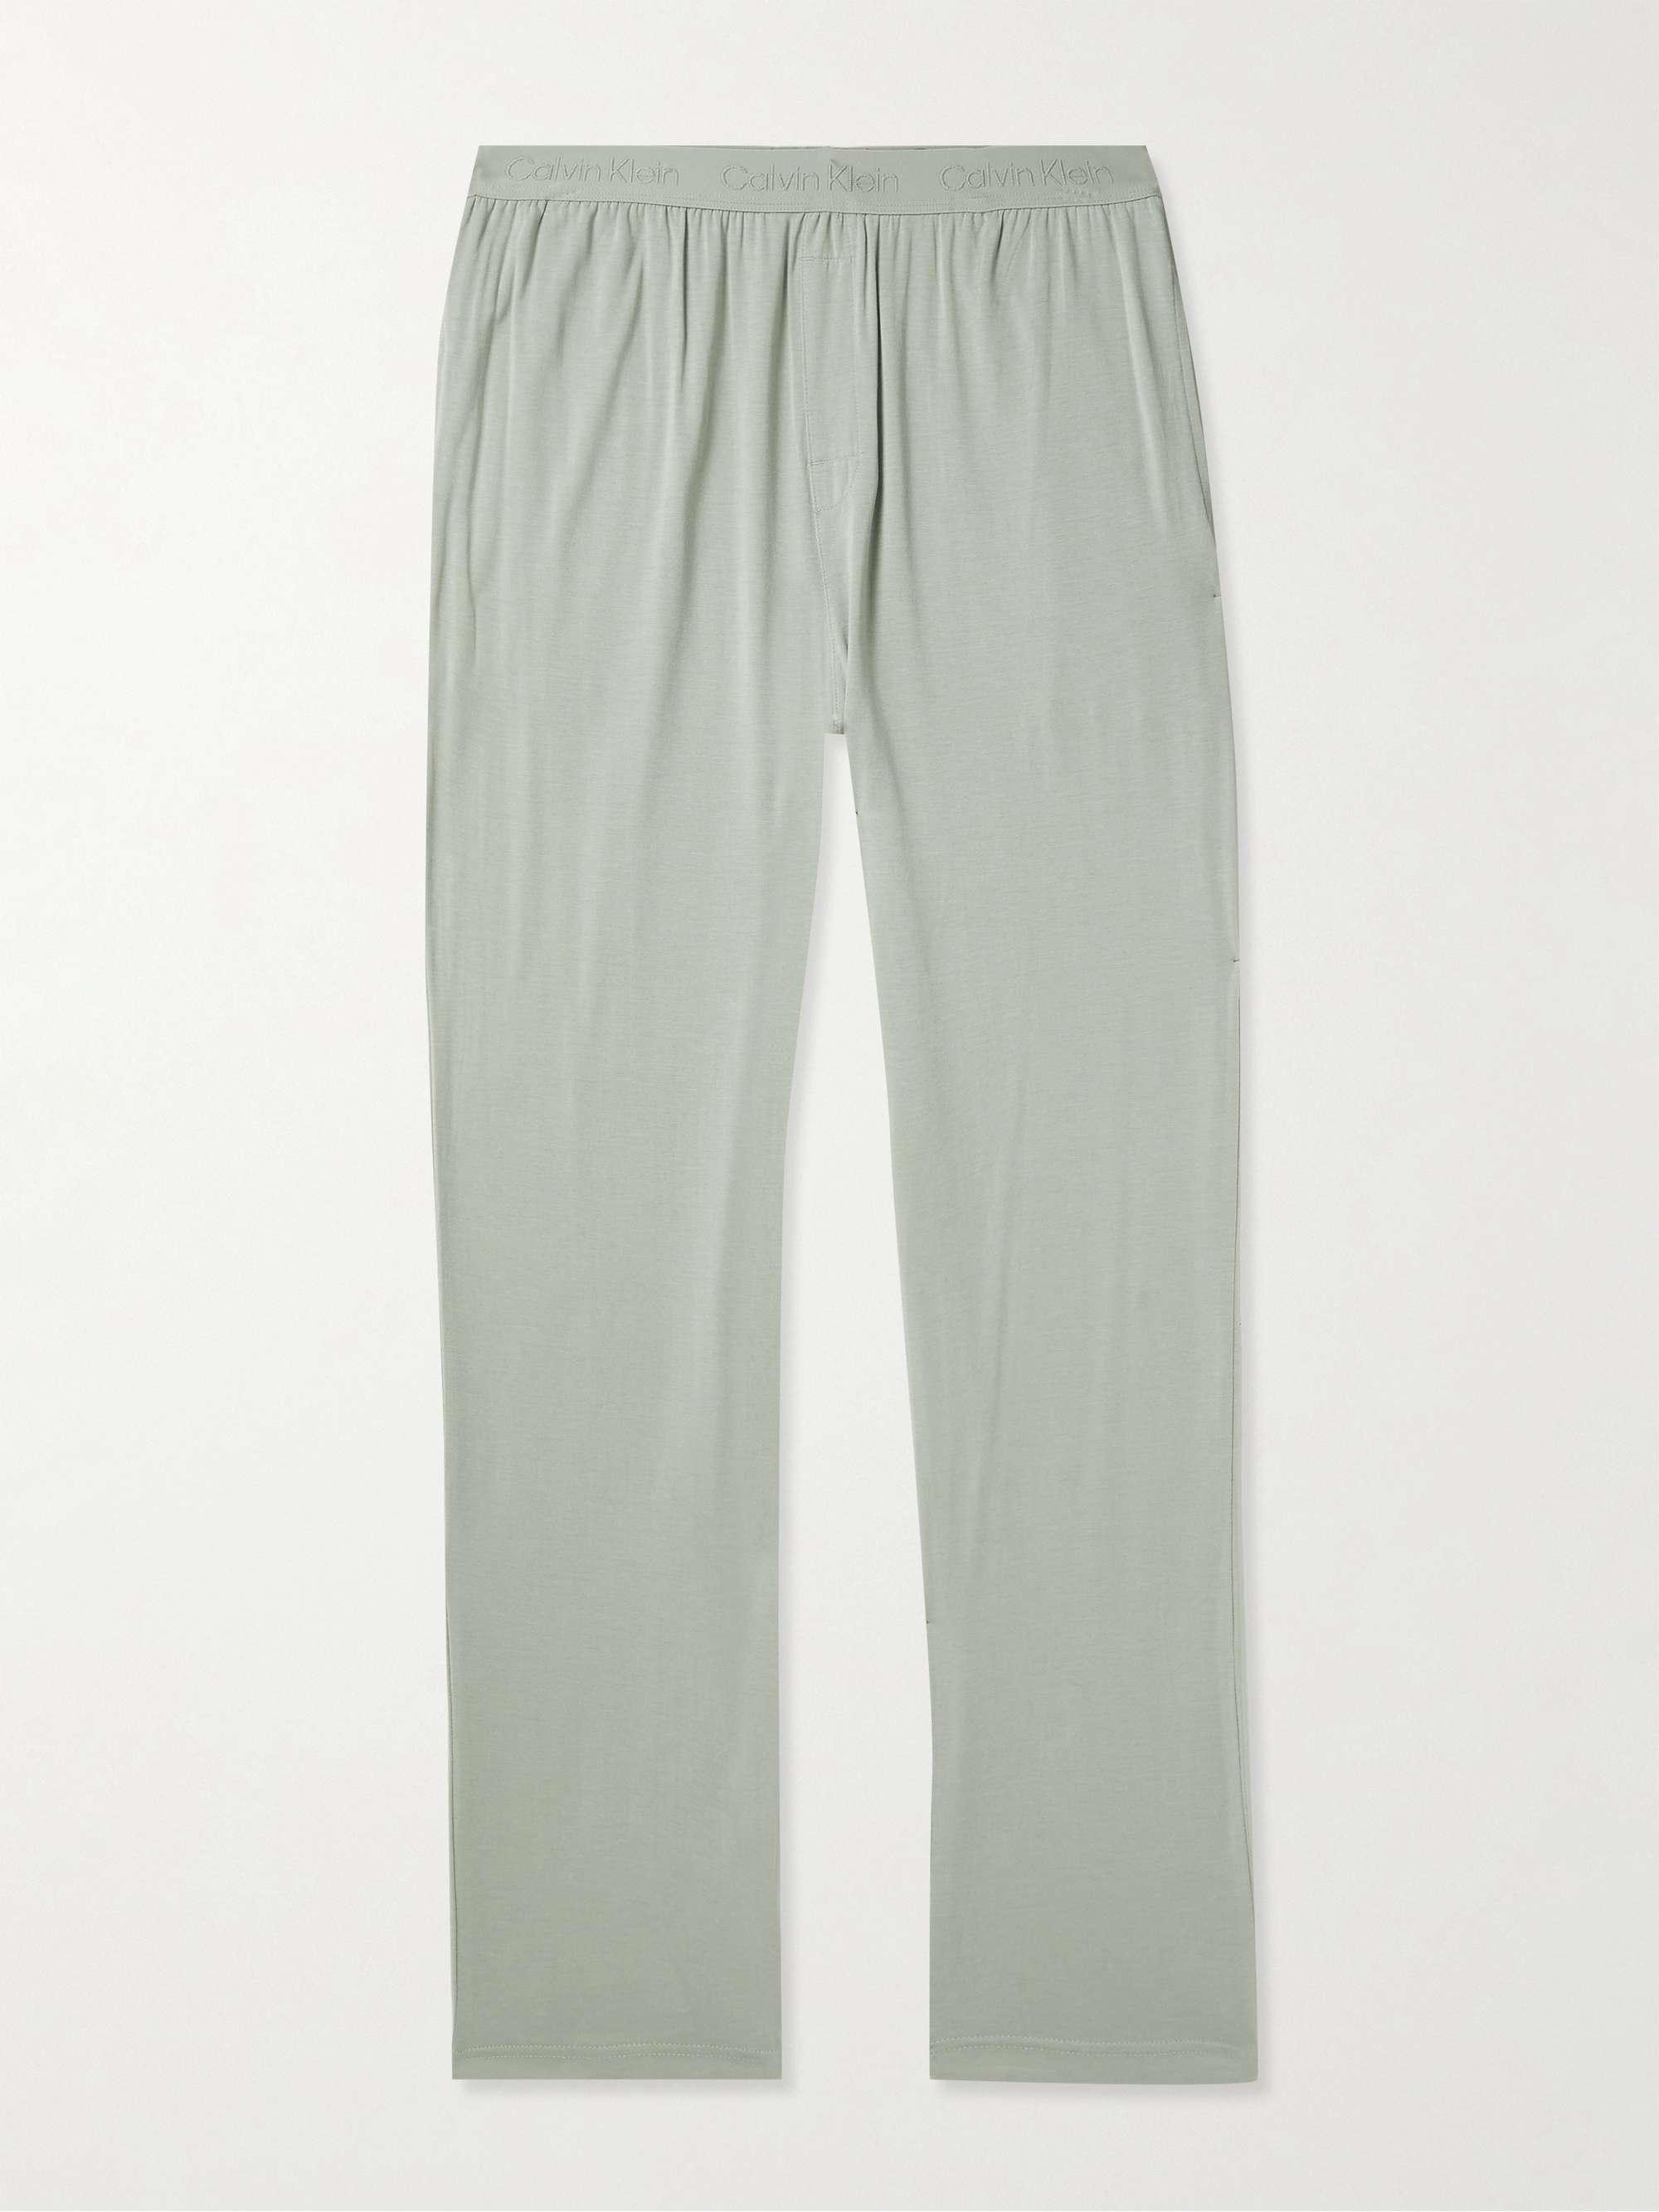 CALVIN KLEIN UNDERWEAR Stretch Modal and Cashmere-Blend Jersey Pyjama Trousers